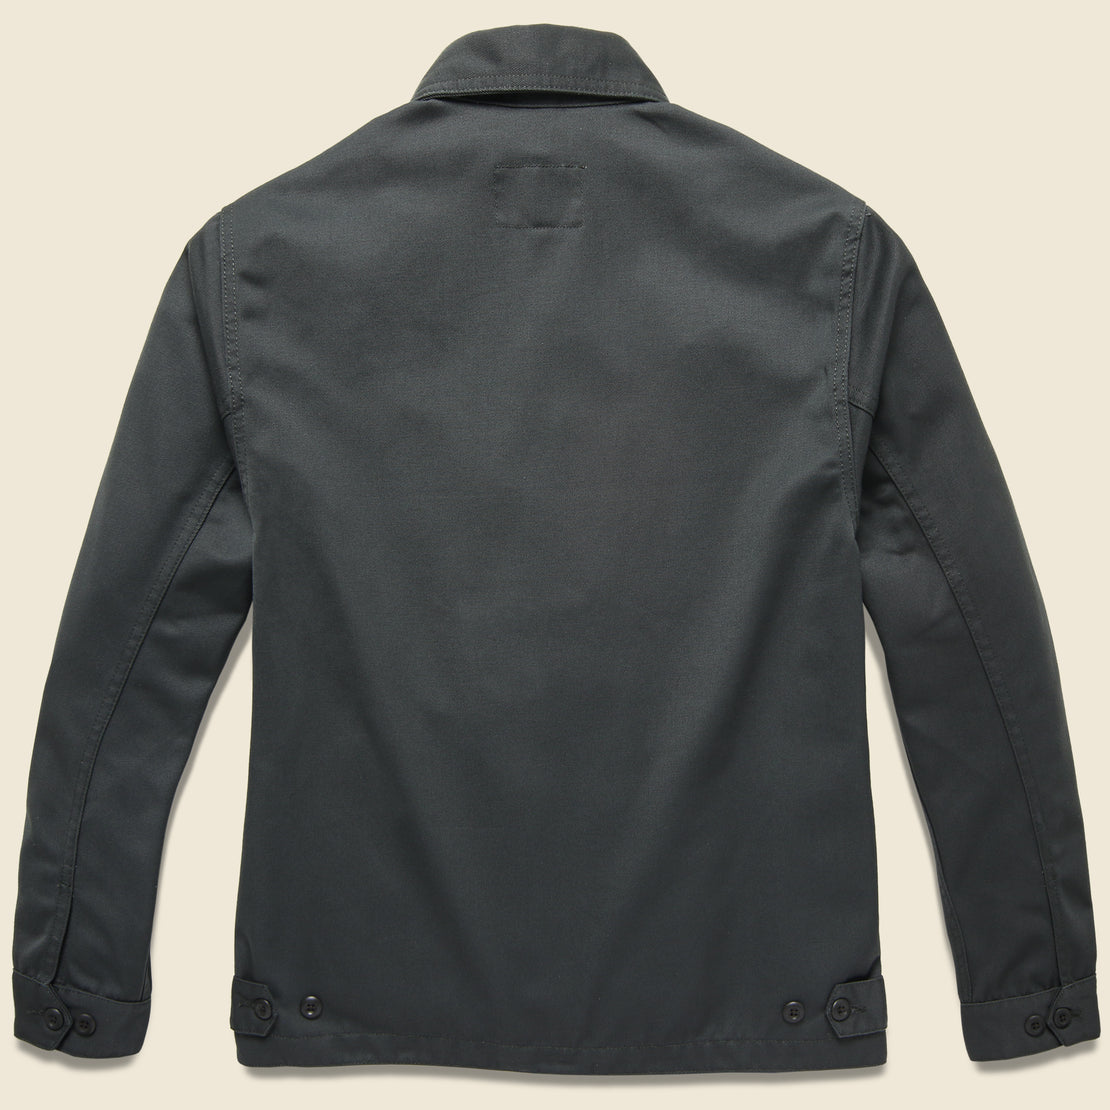 Modular Jacket - Asphalt - Carhartt WIP - STAG Provisions - Outerwear - Coat / Jacket